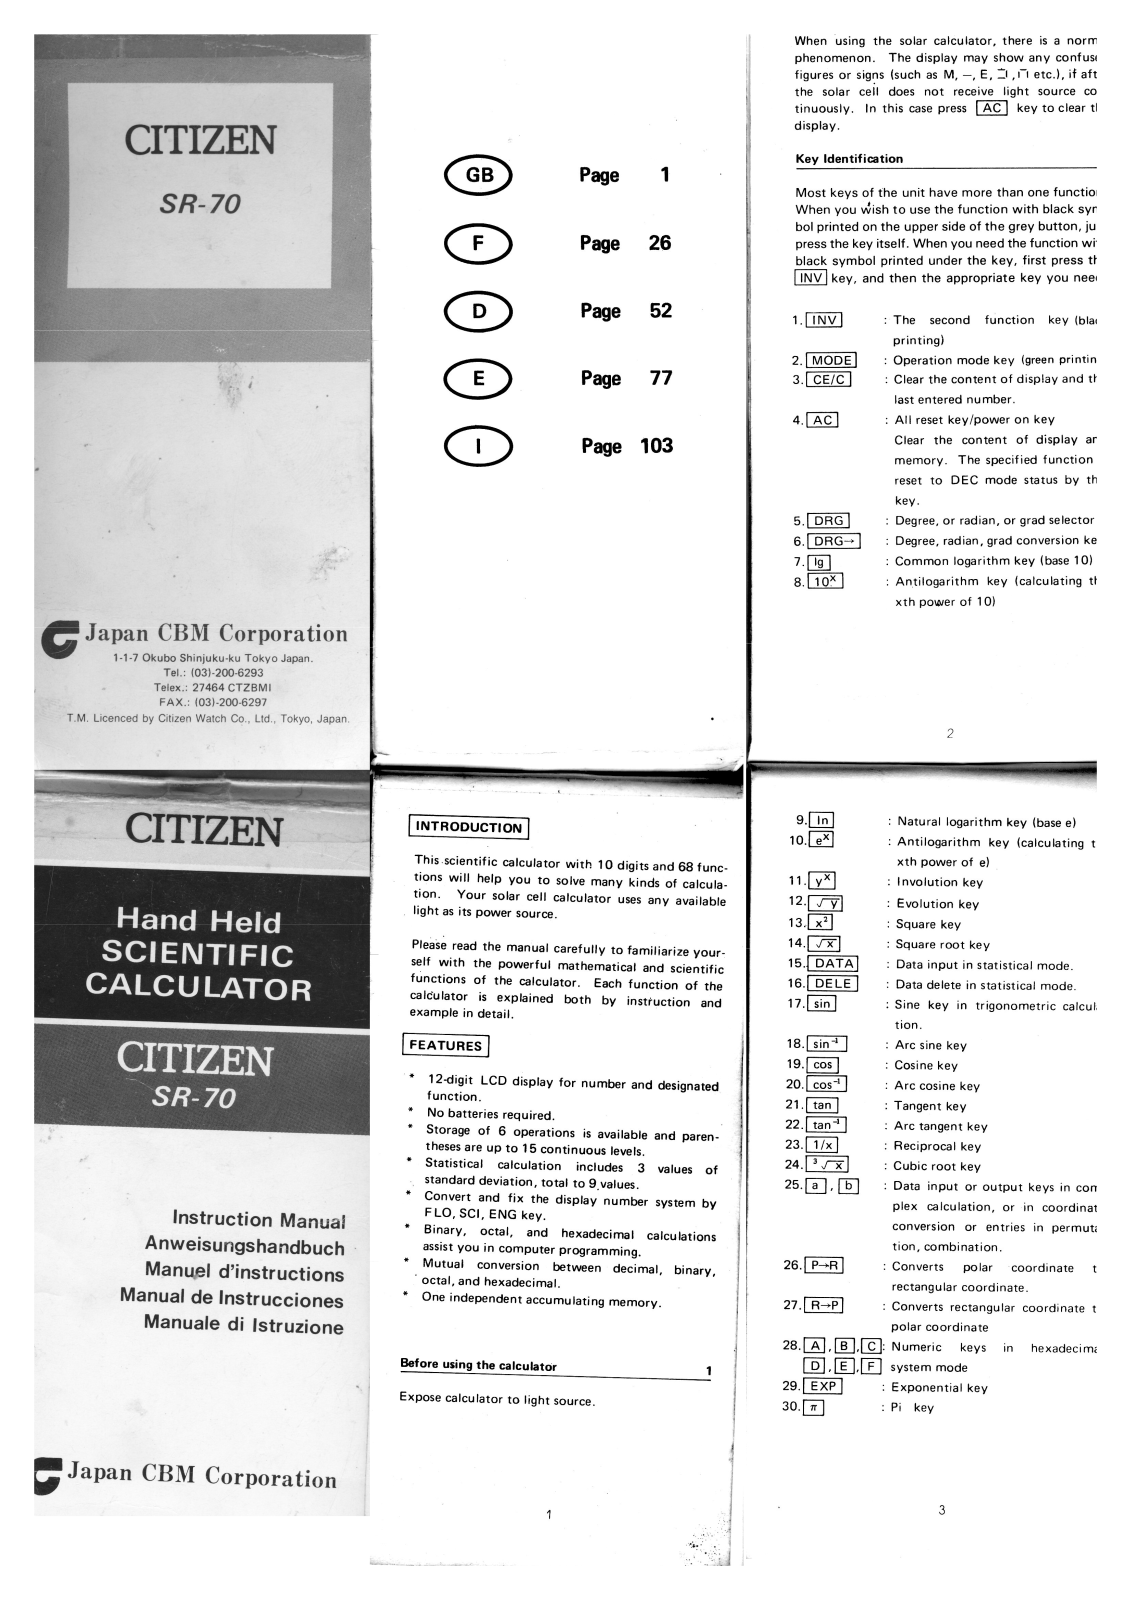 Citizen SR-70 Manual